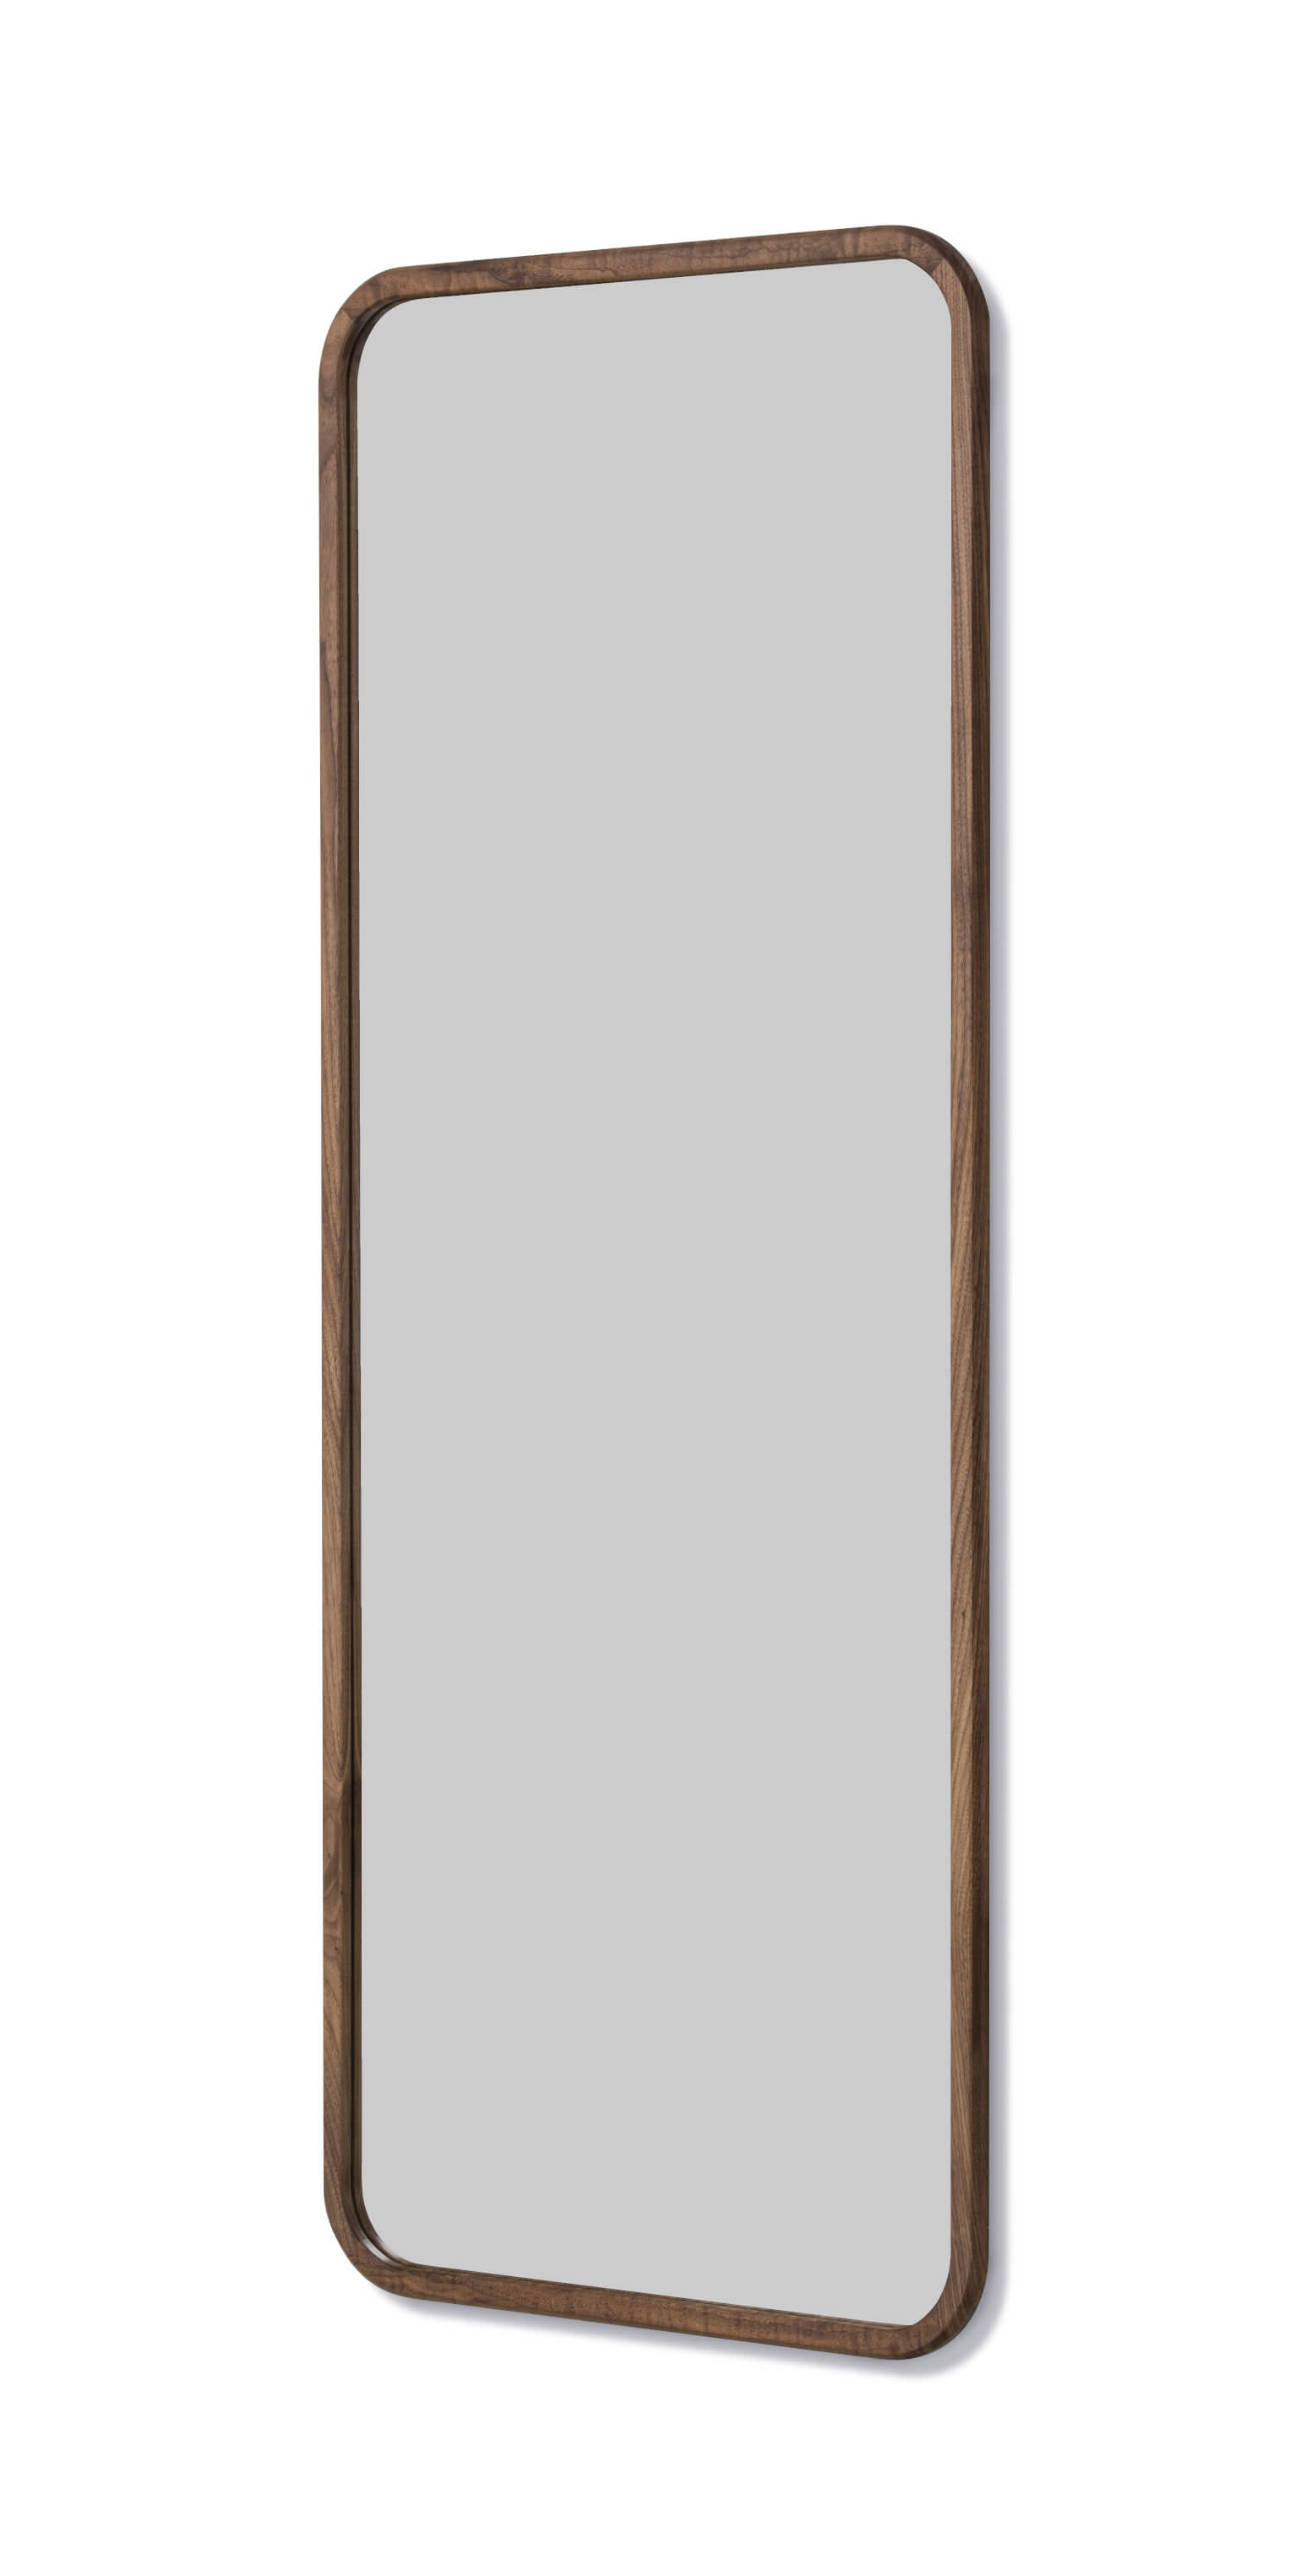 Silhouette Spiegel, 70 x 70 cm, walnuss geölt